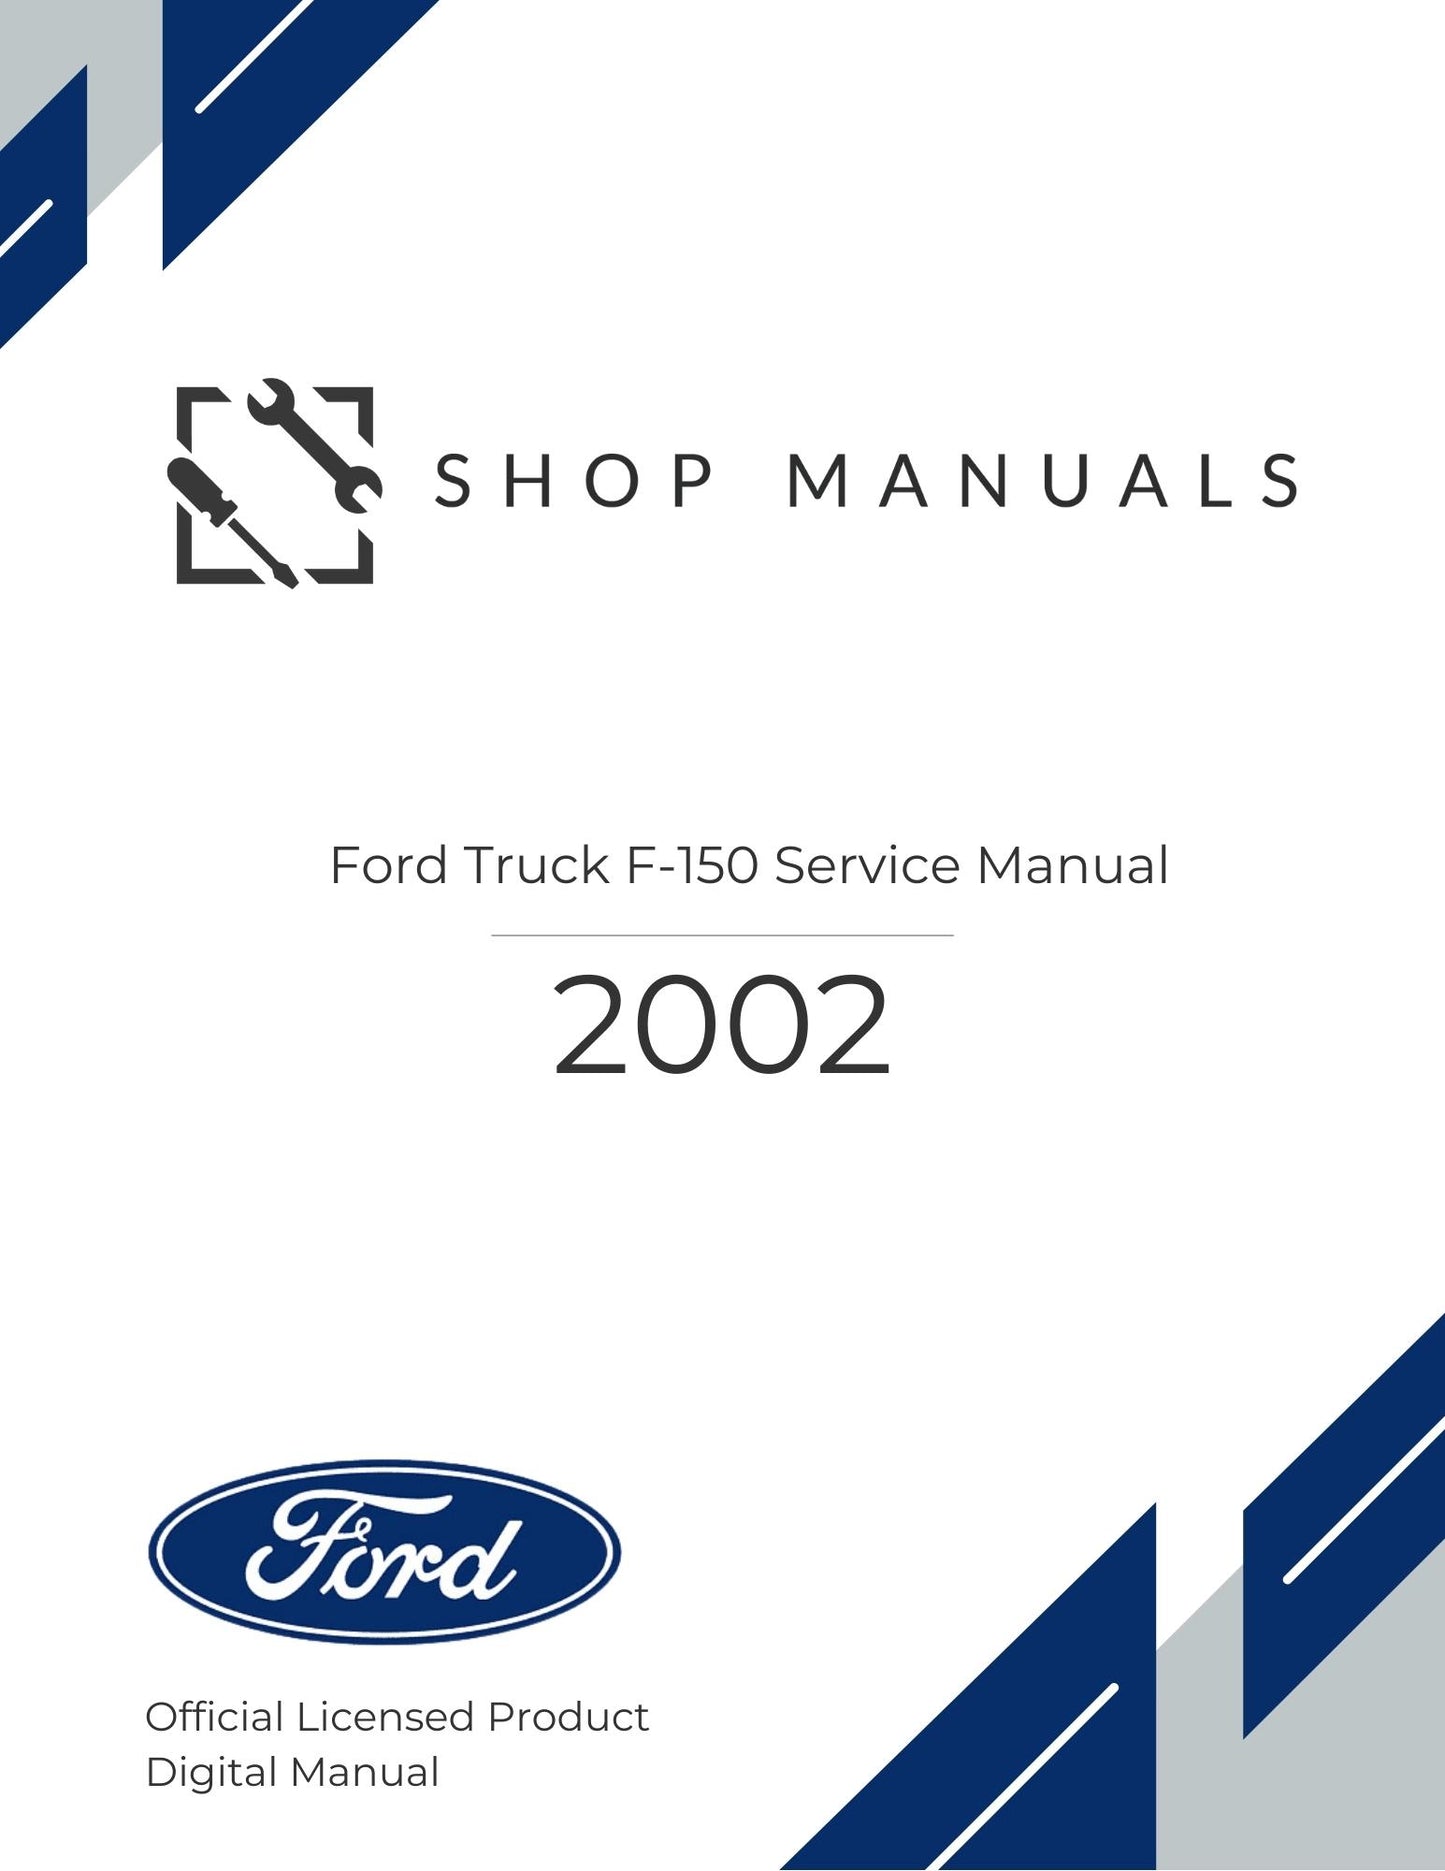 2002 Ford Truck F-150 Service Manual